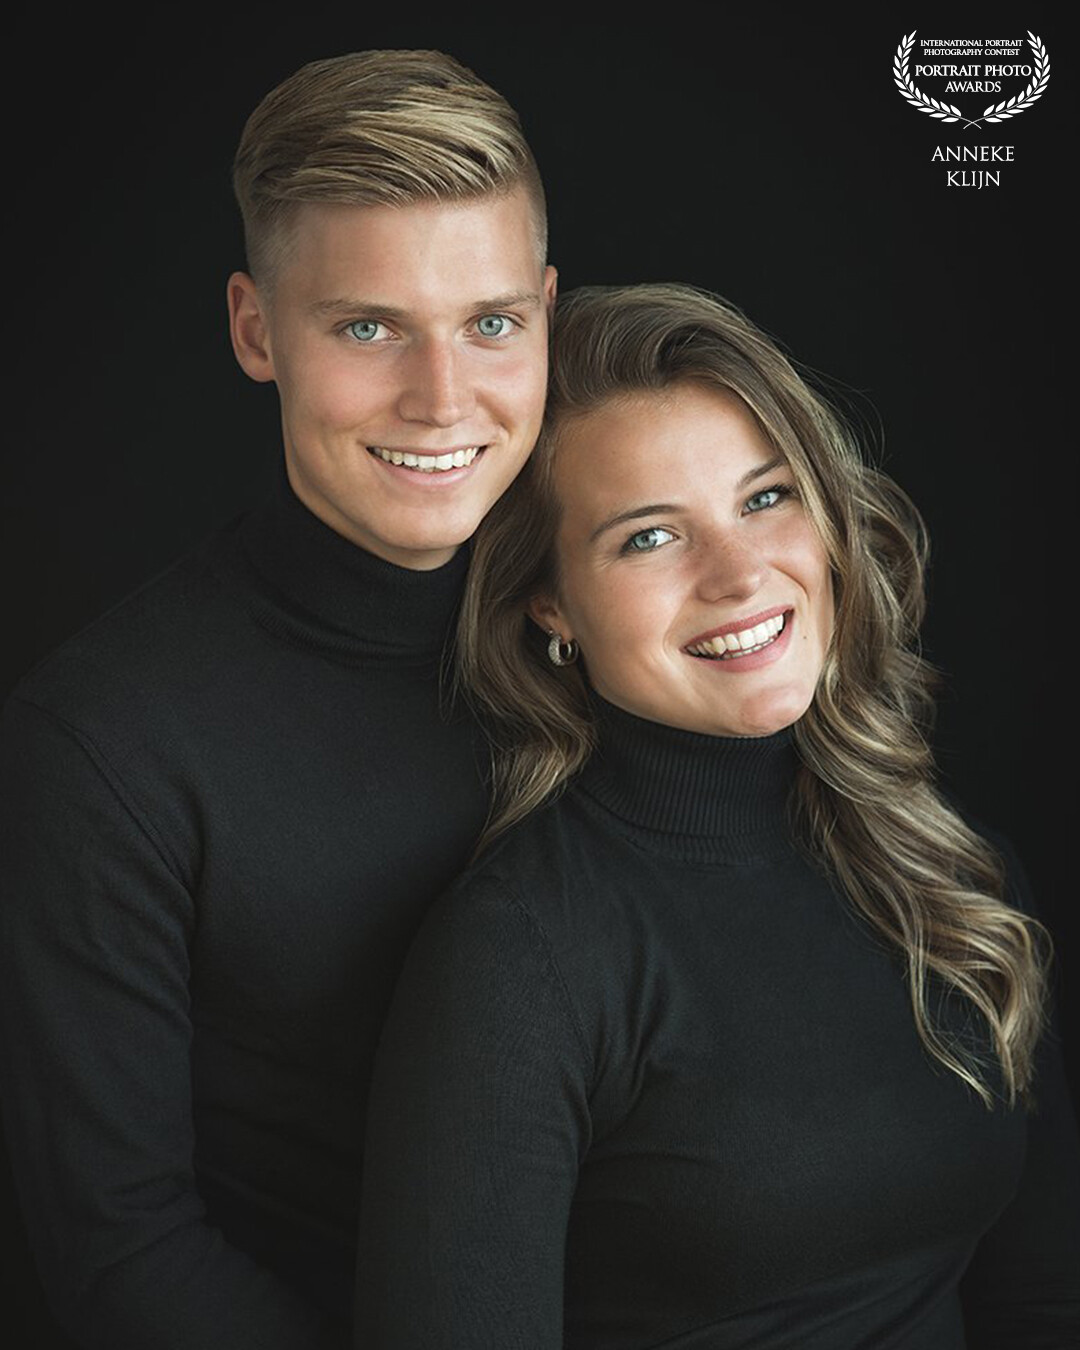 Models: Johannes and Sophie<br />
Created and edited by: @anneke_klijn_fotografie<br />
www.annekeklijnfotografie.nl